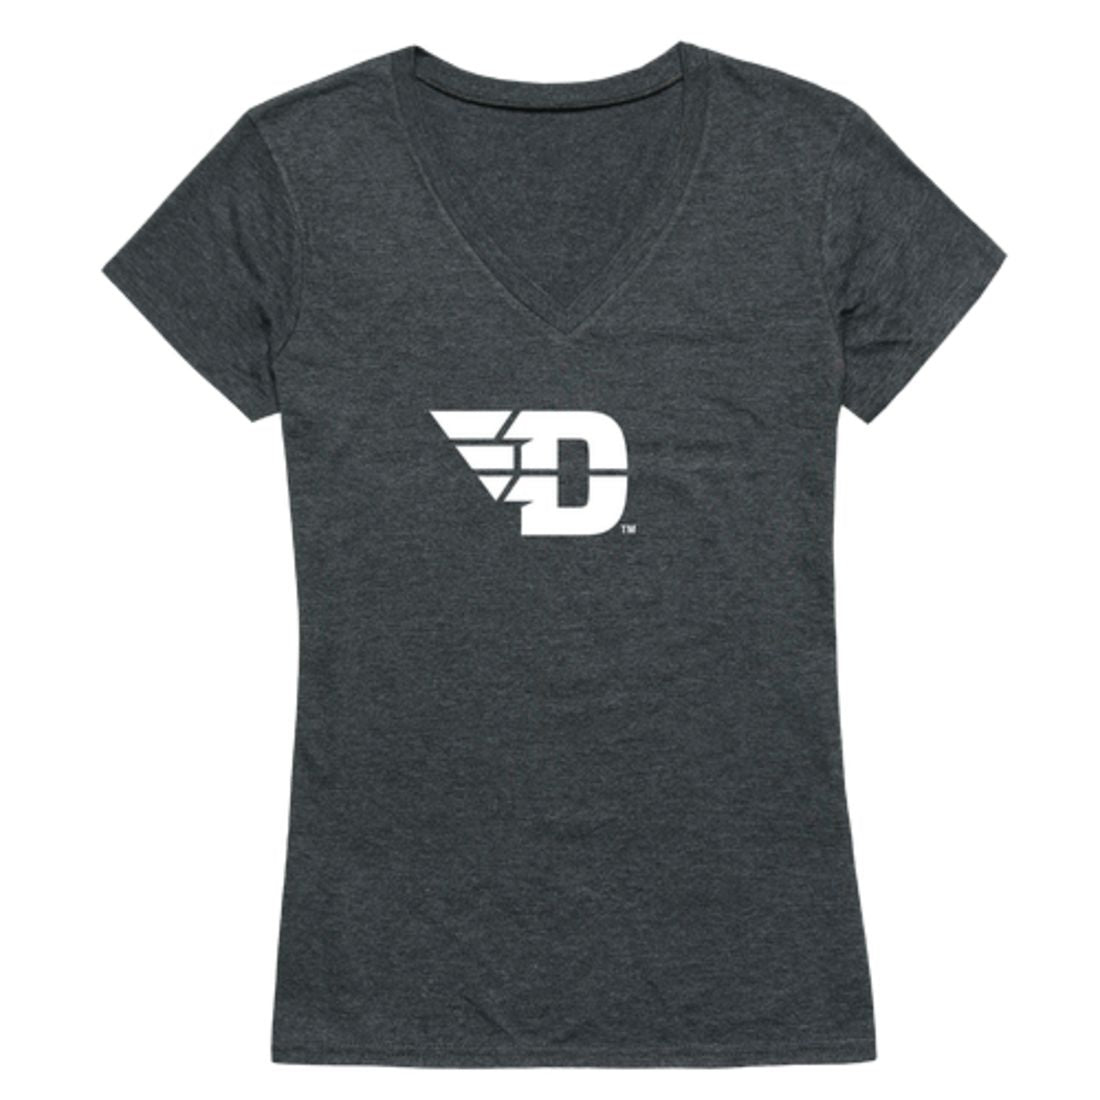 University of Dayton Flyers Womens Cinder T-Shirt